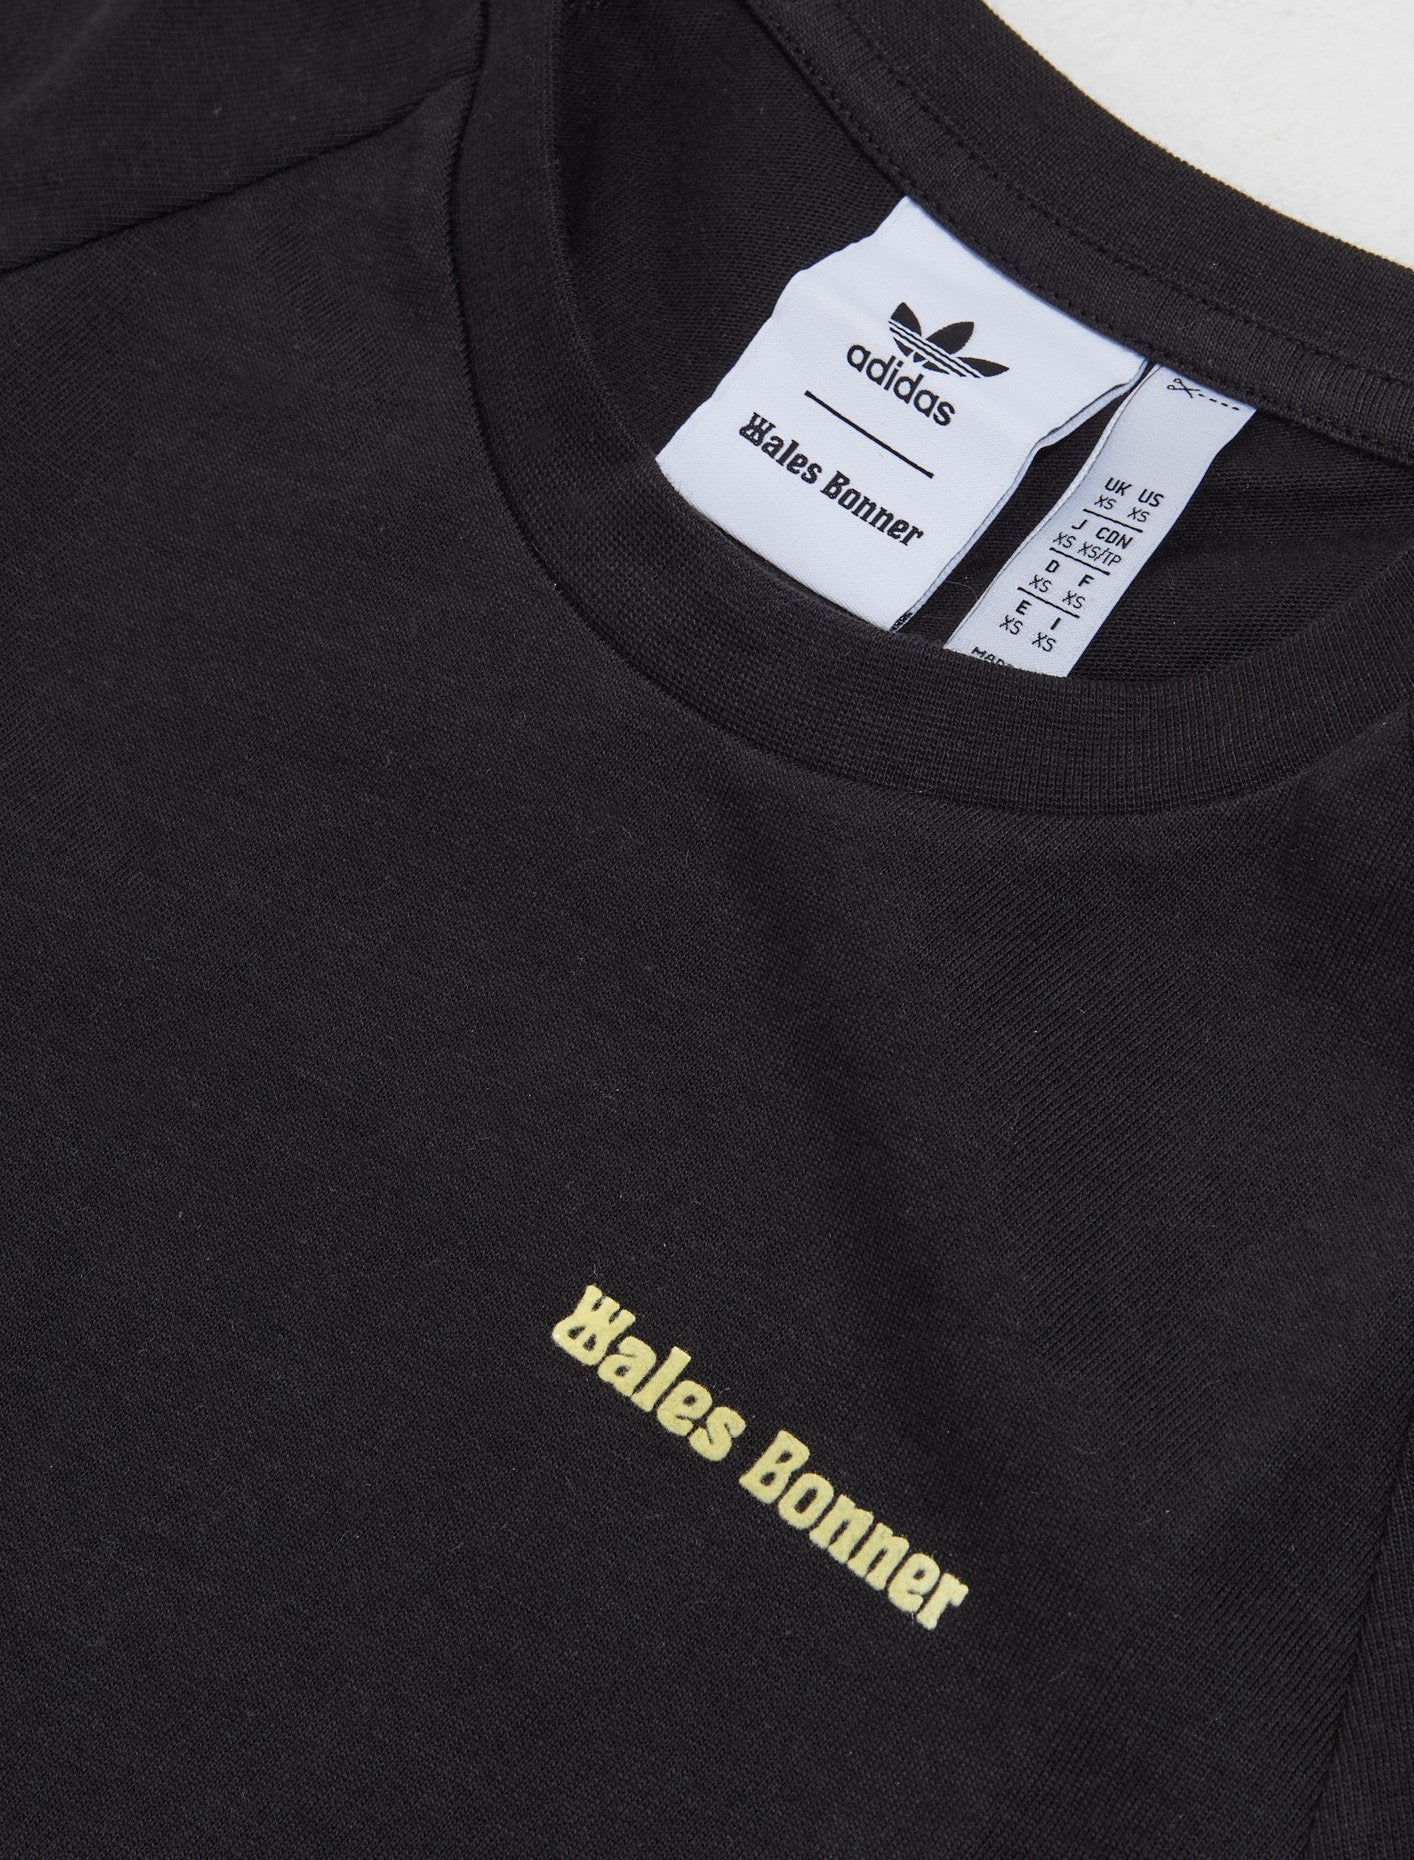 x Wales Bonner T-Shirt in Black